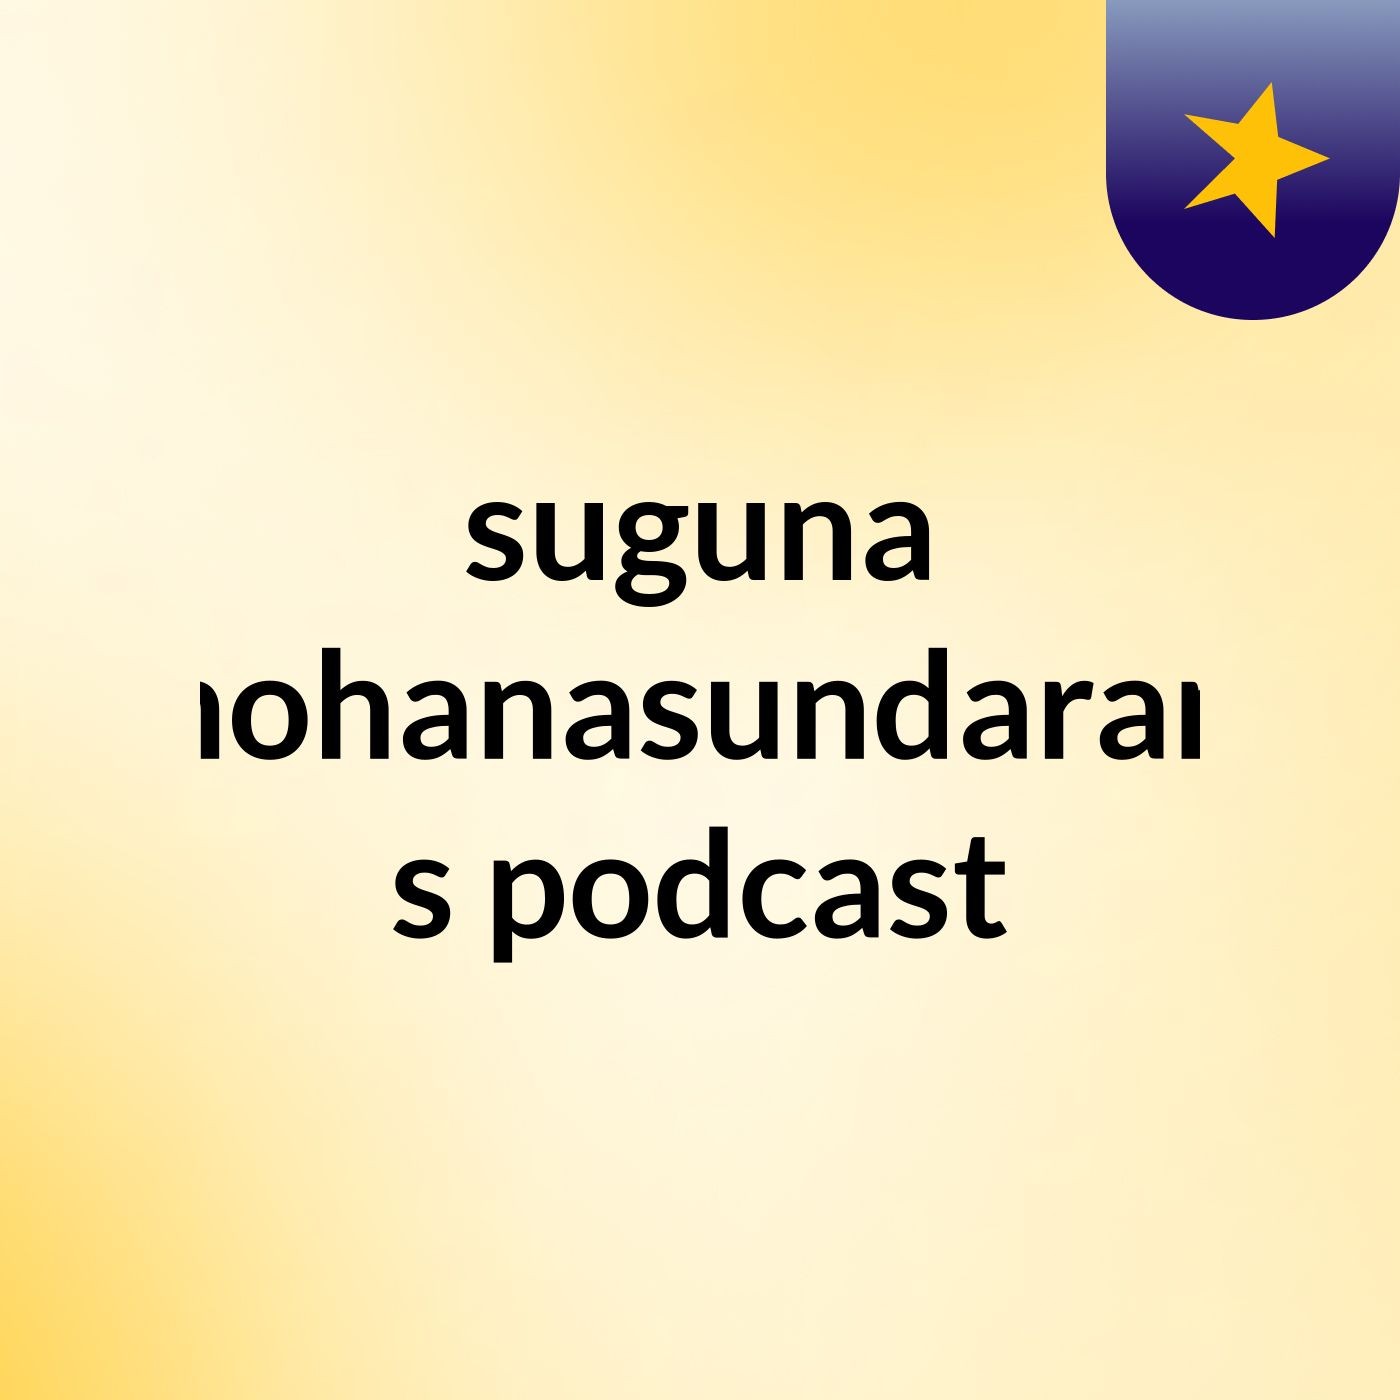 Episode 11 - suguna mohanasundaram's podcast